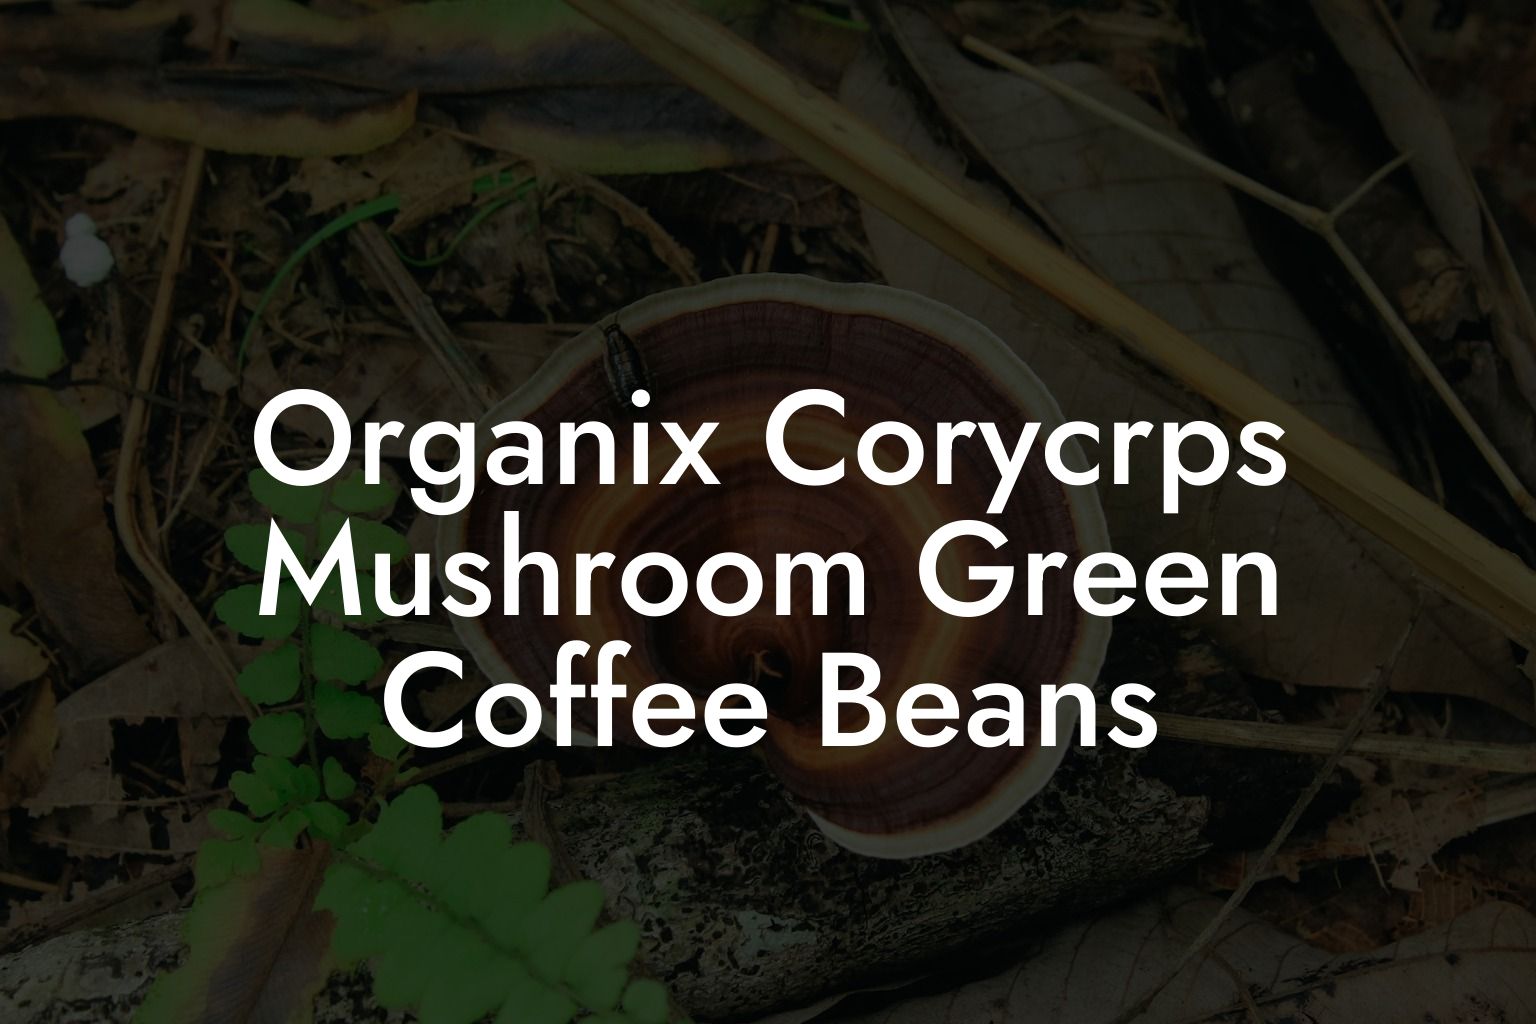 Organix Corycrps Mushroom Green Coffee Beans